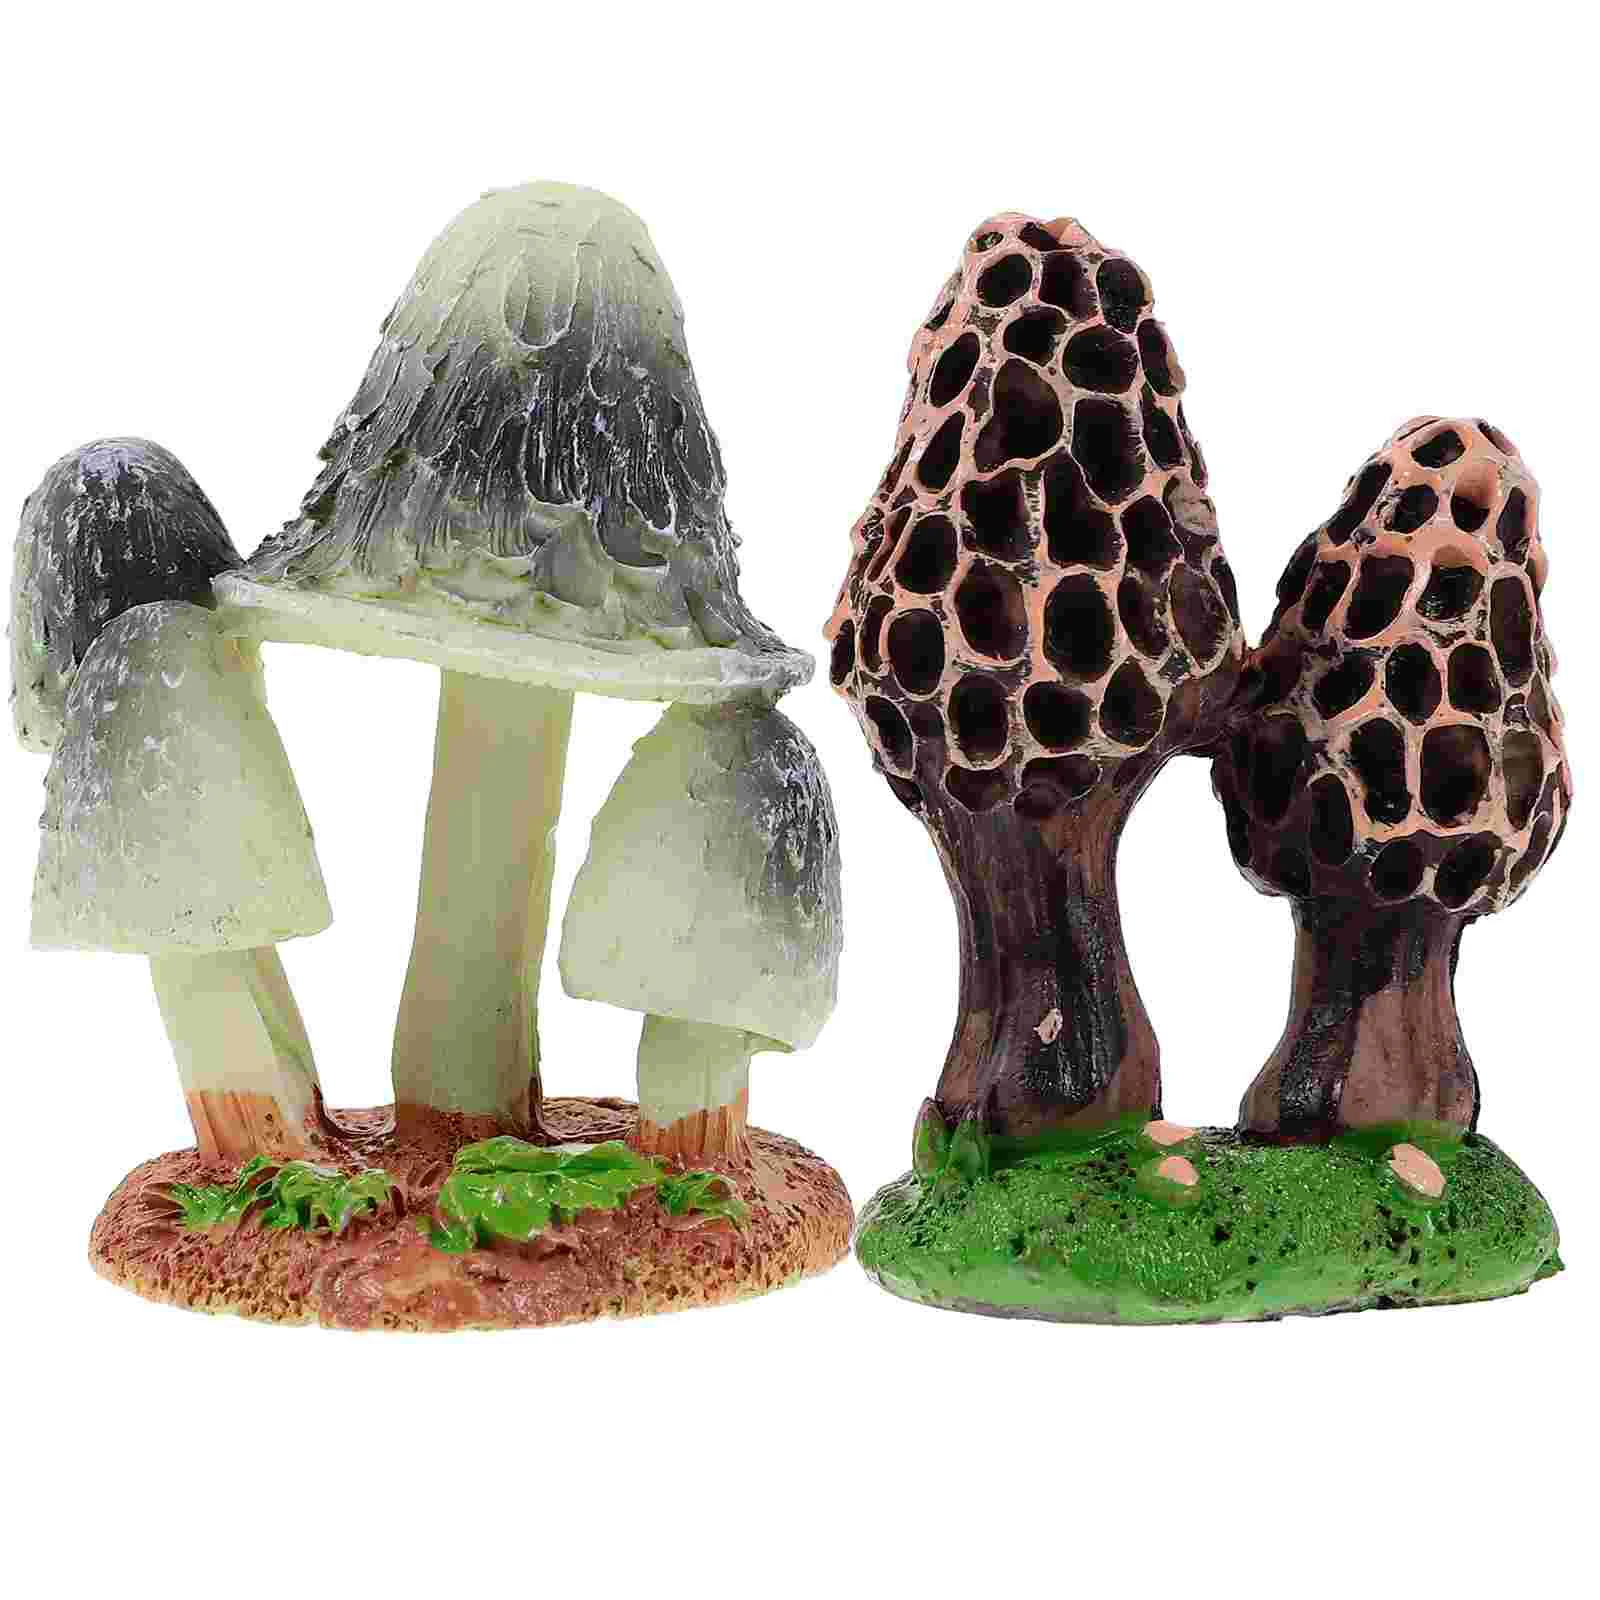 

2 Pcs Mushroom Figurines DIY Crafts Mini Mushrooms Ornaments Fairy Miniature Statues Synthetic Resin Garden